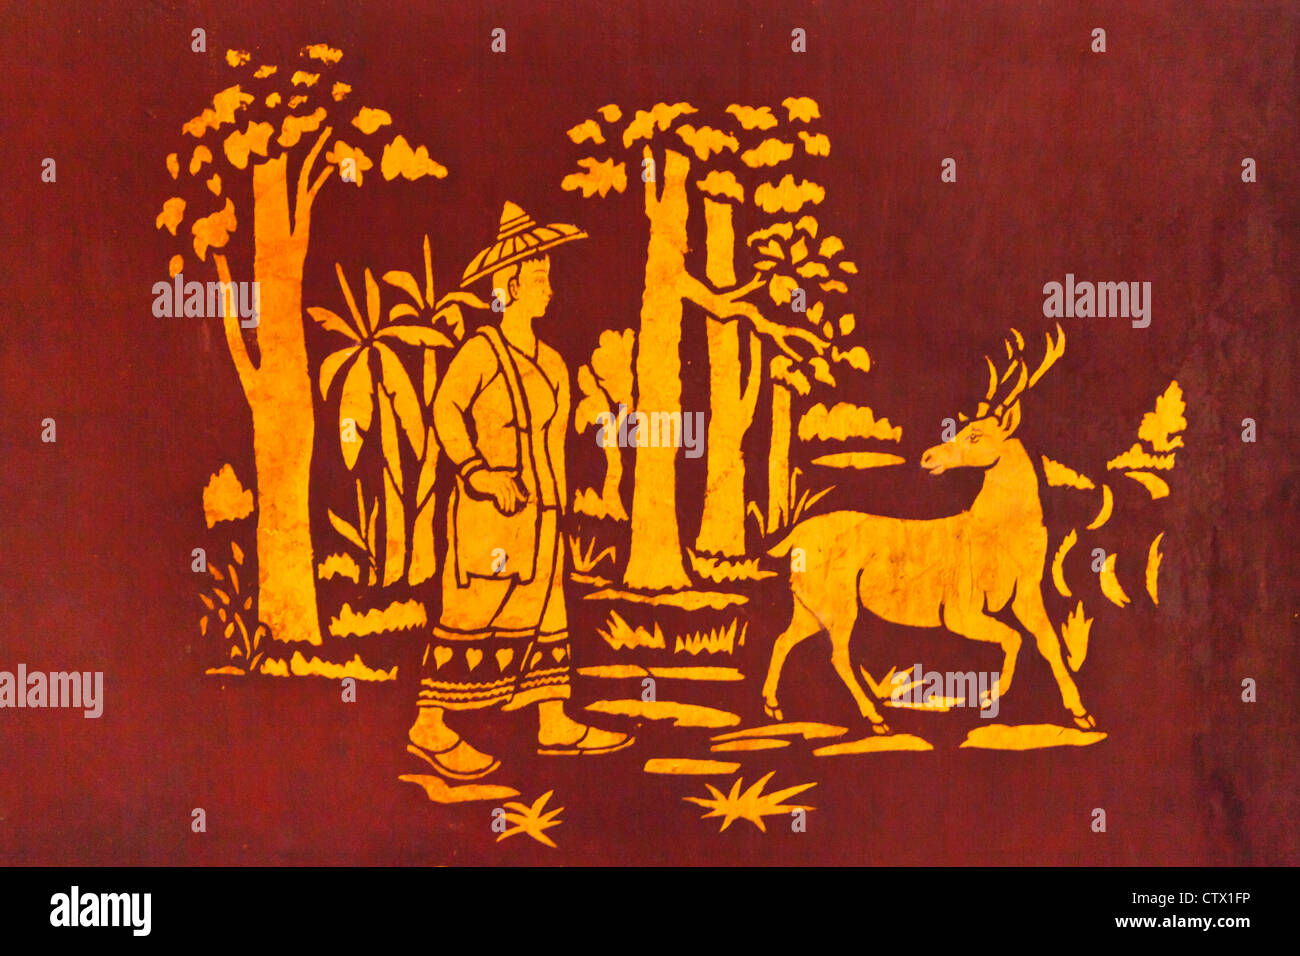 Schablone Gemälde im WAT JONG KHAM stammende mindestens dem 13. Jahrhundert - KENGTUNG auch bekannt als KYAINGTONG, MYANMAR Stockfoto